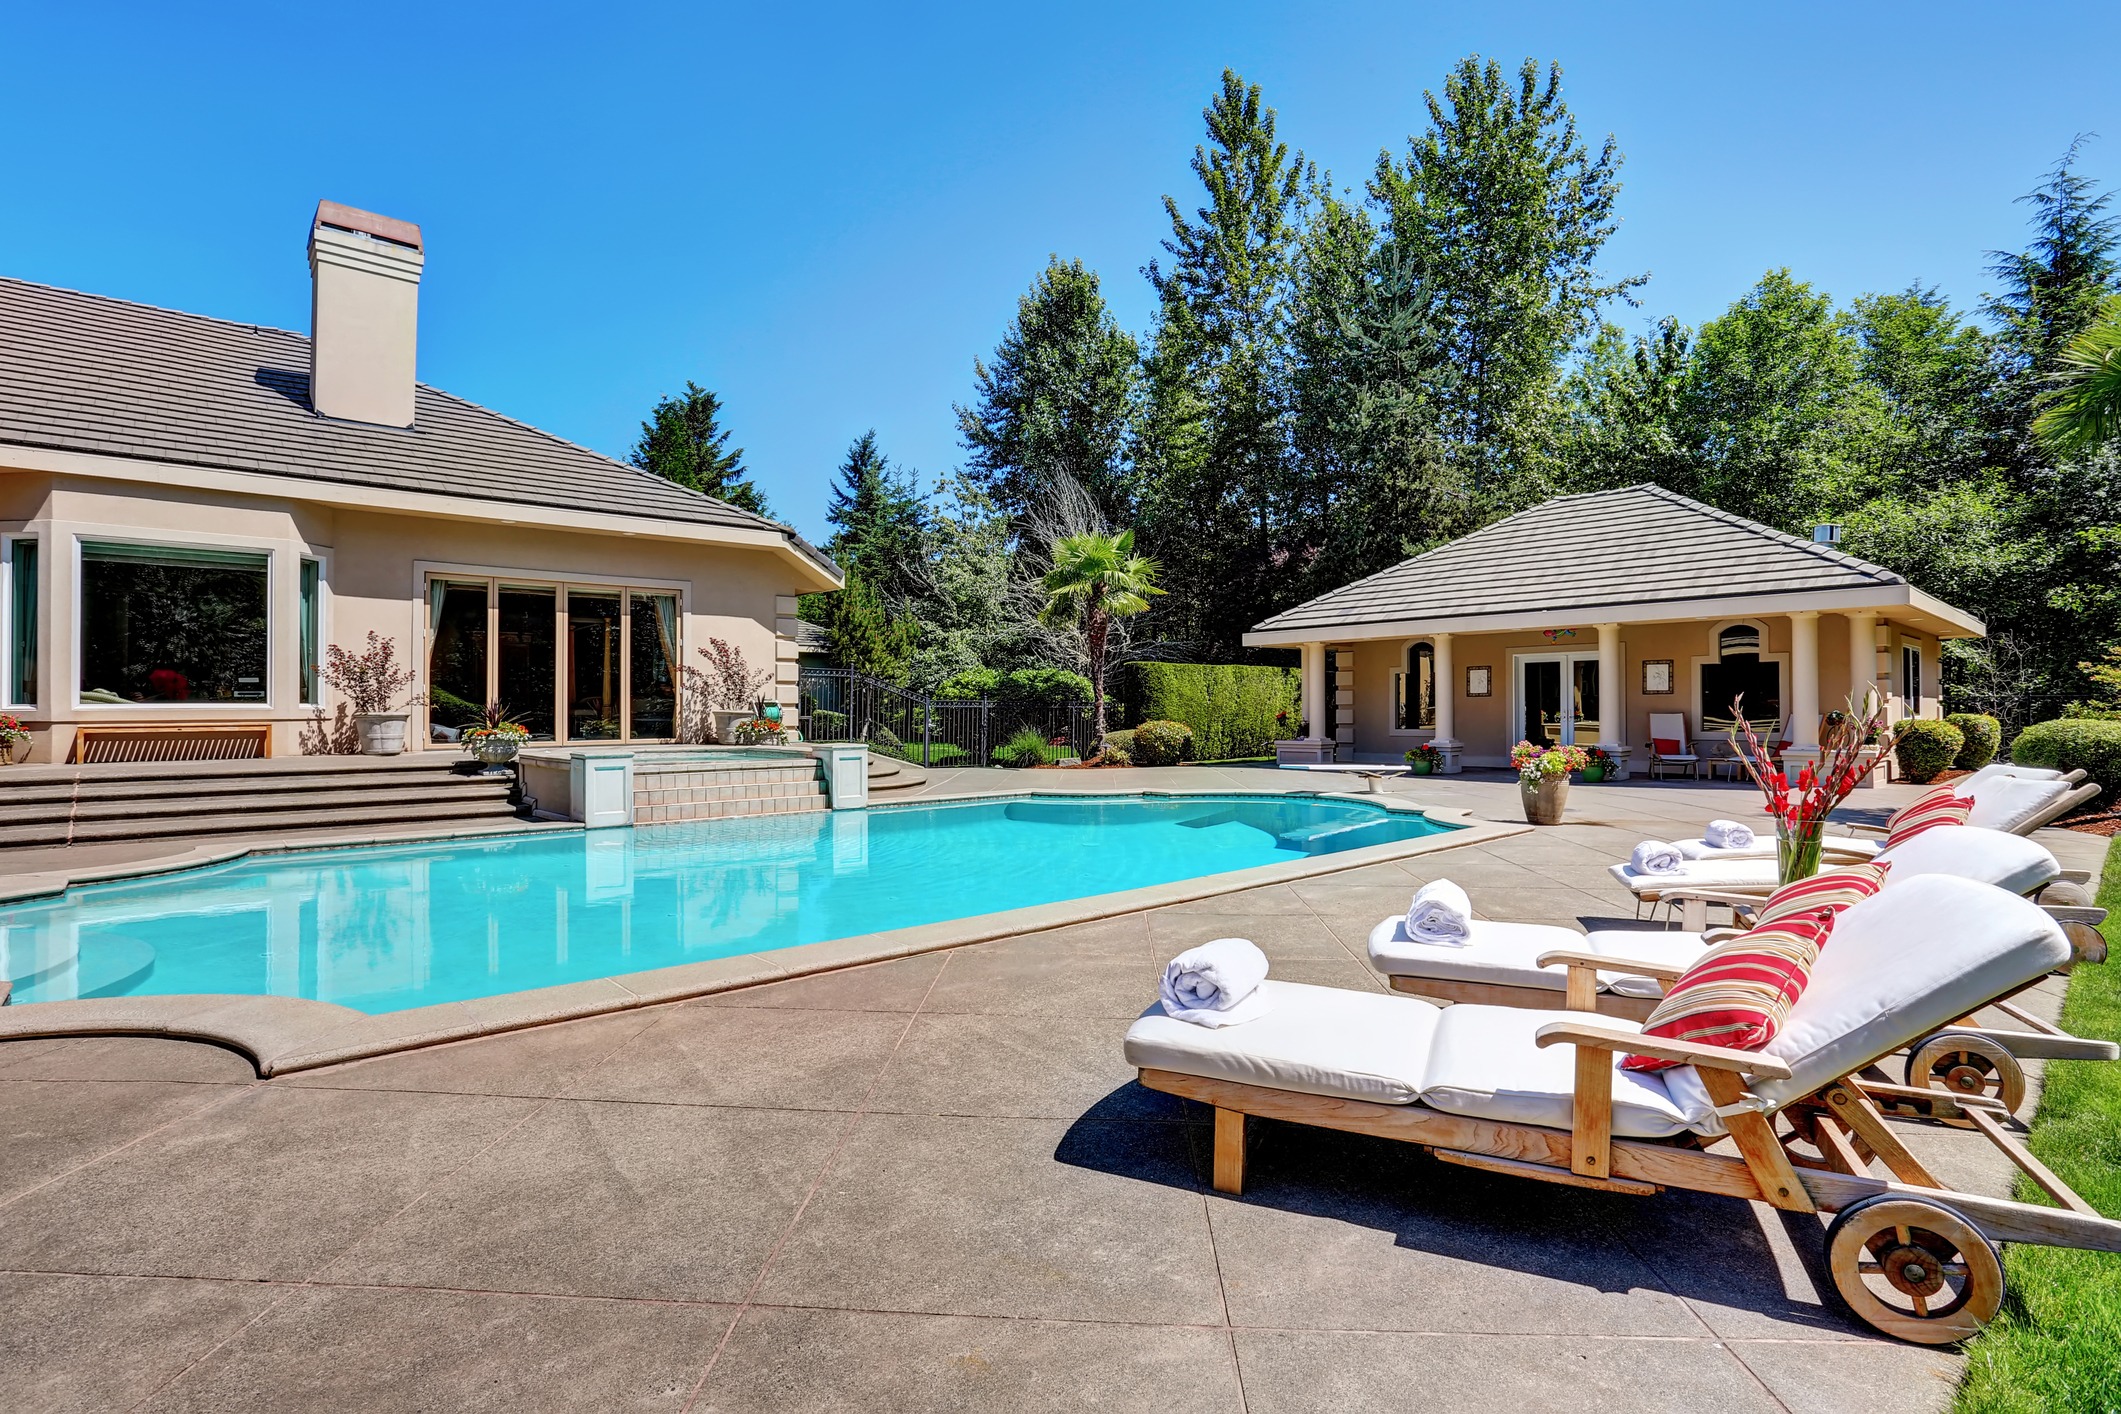 Great backyard with swimming pool. American Suburban luxury house